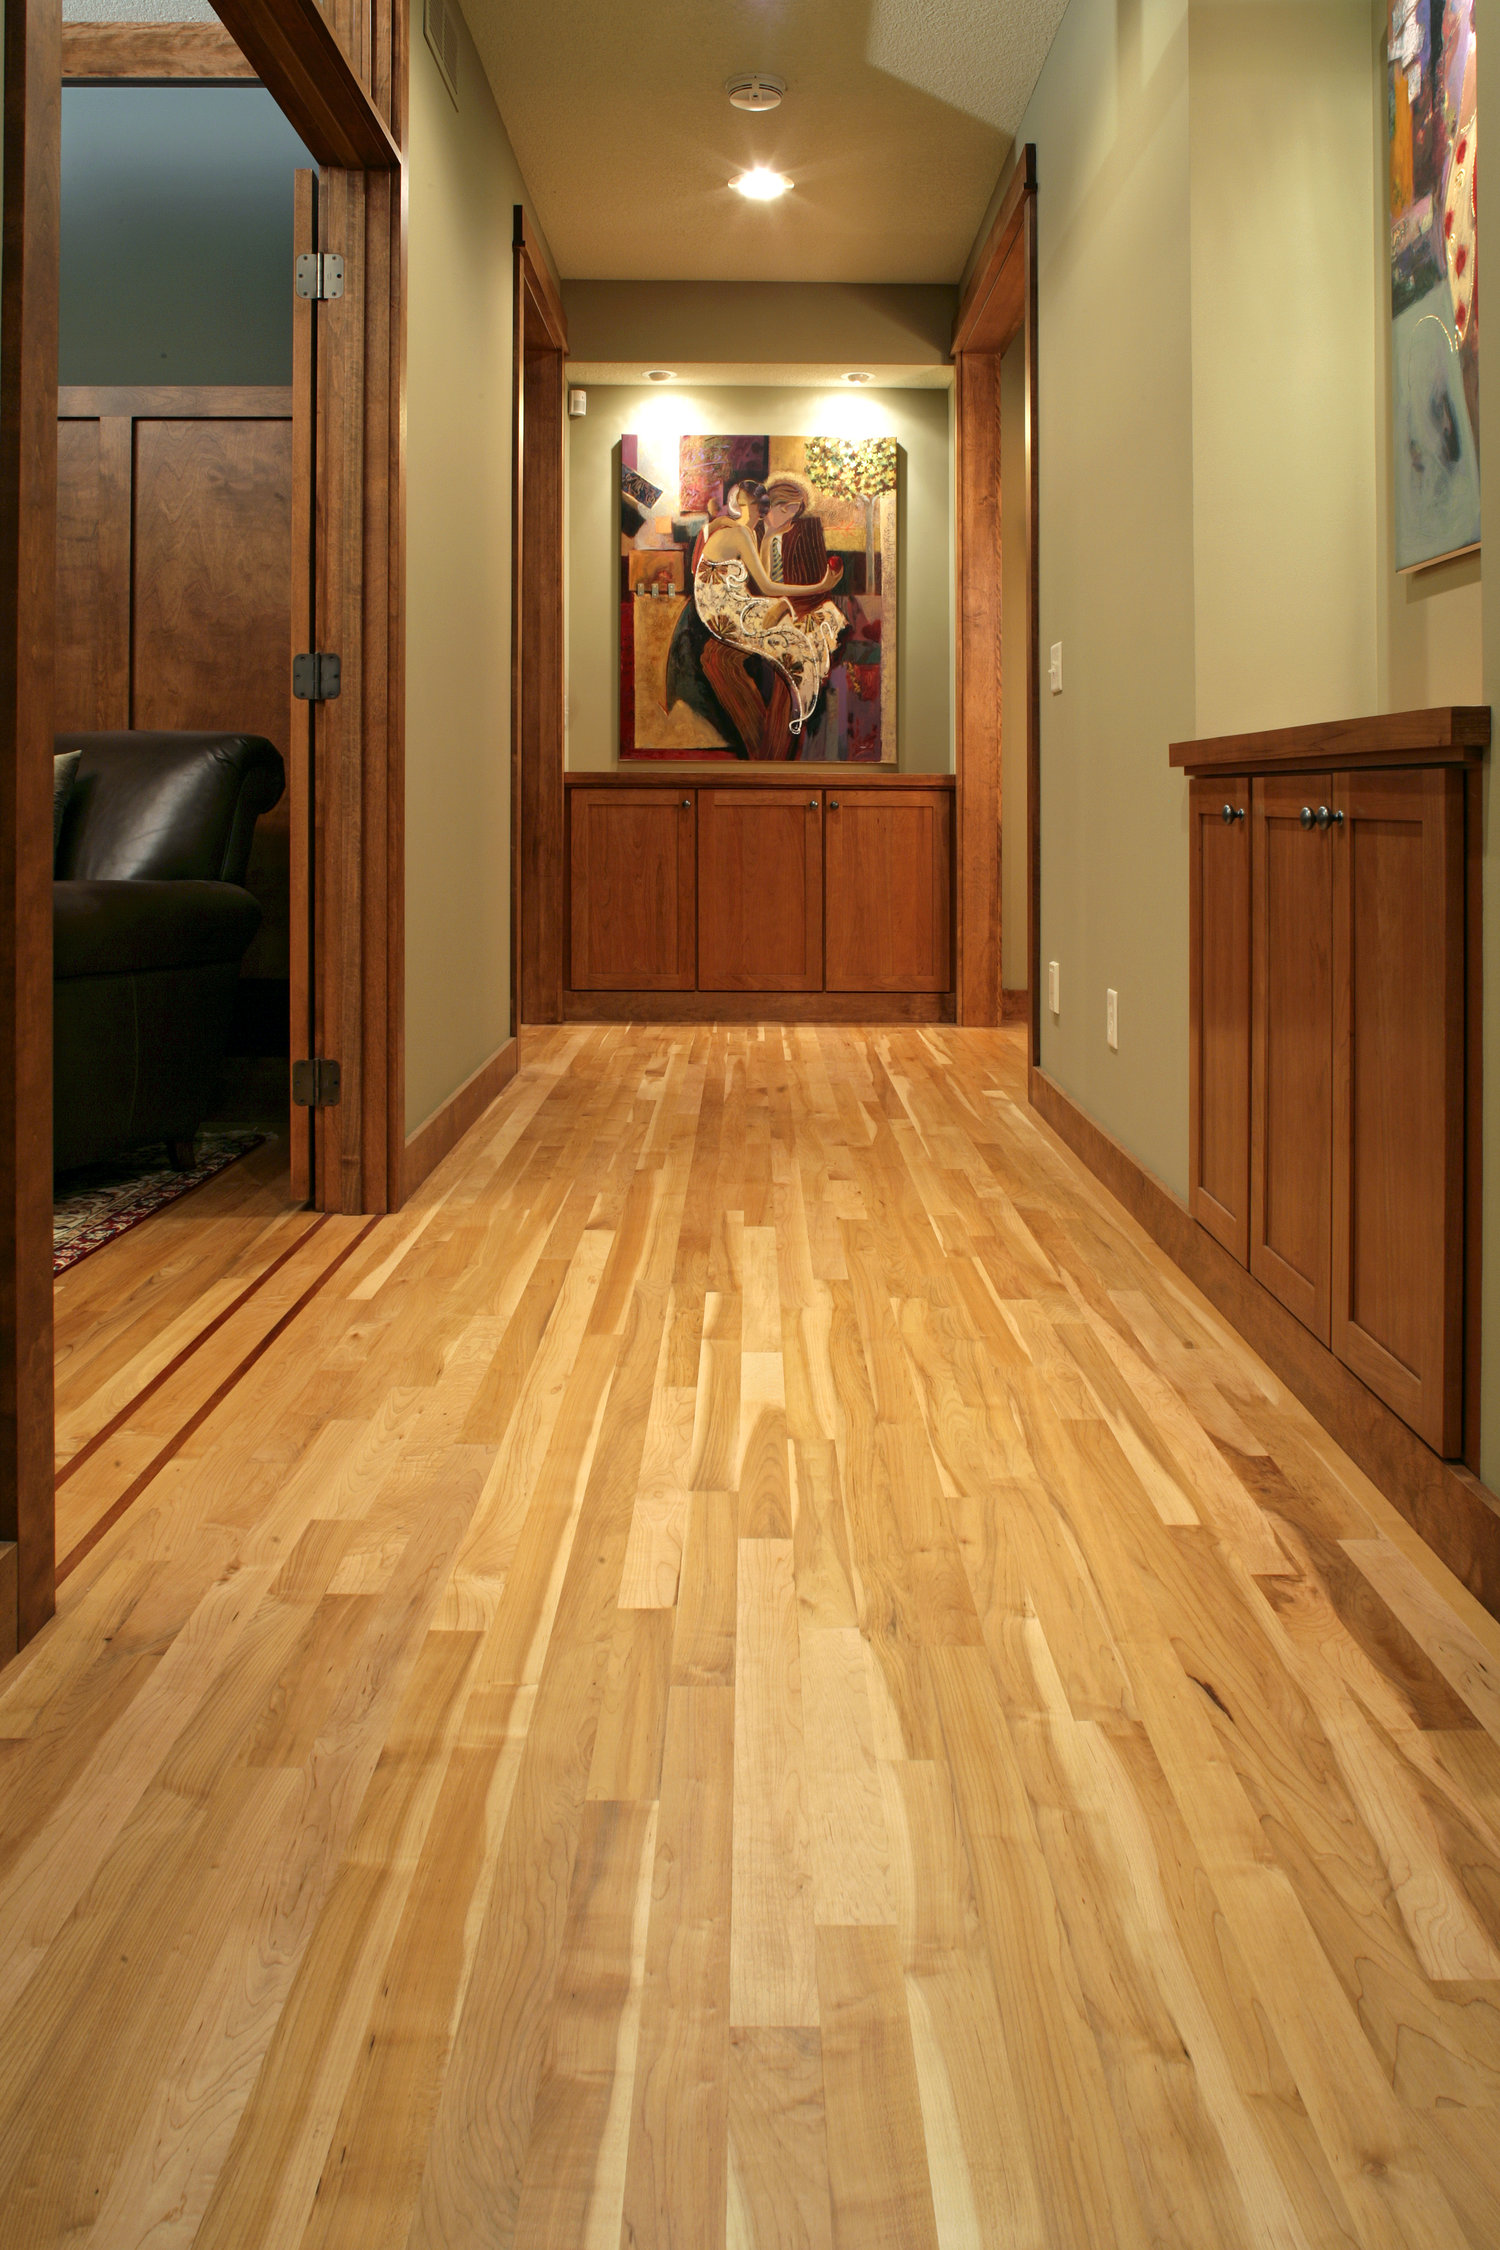 Our Story North Wood Flooring, Michigan Hardwood Flooring Manufacturers